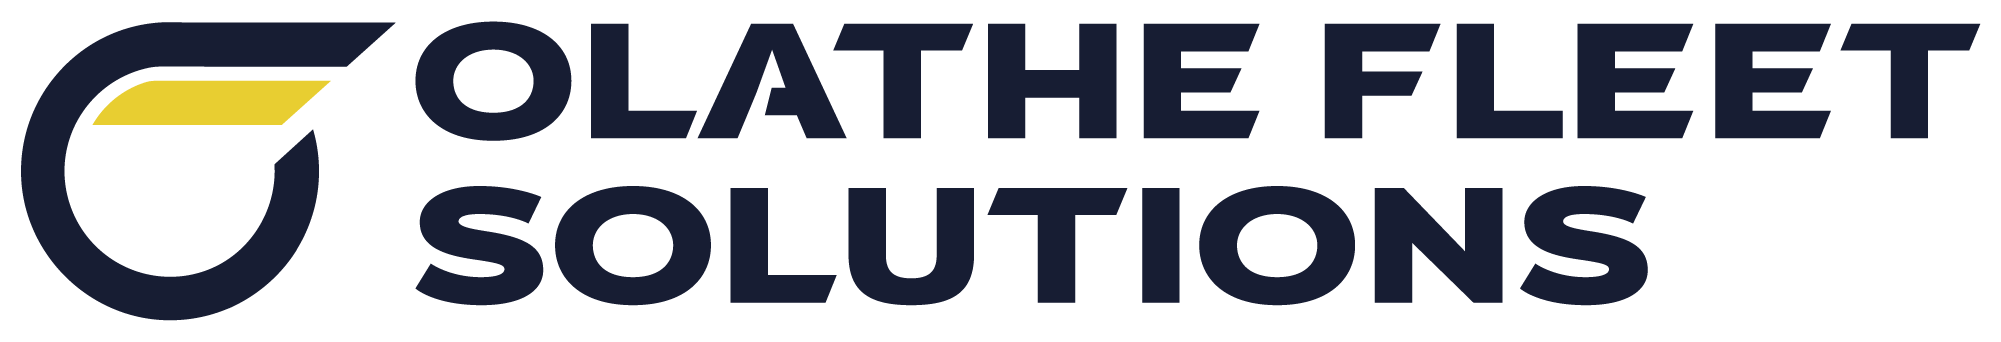 Olathe Fleet Solutions Logo